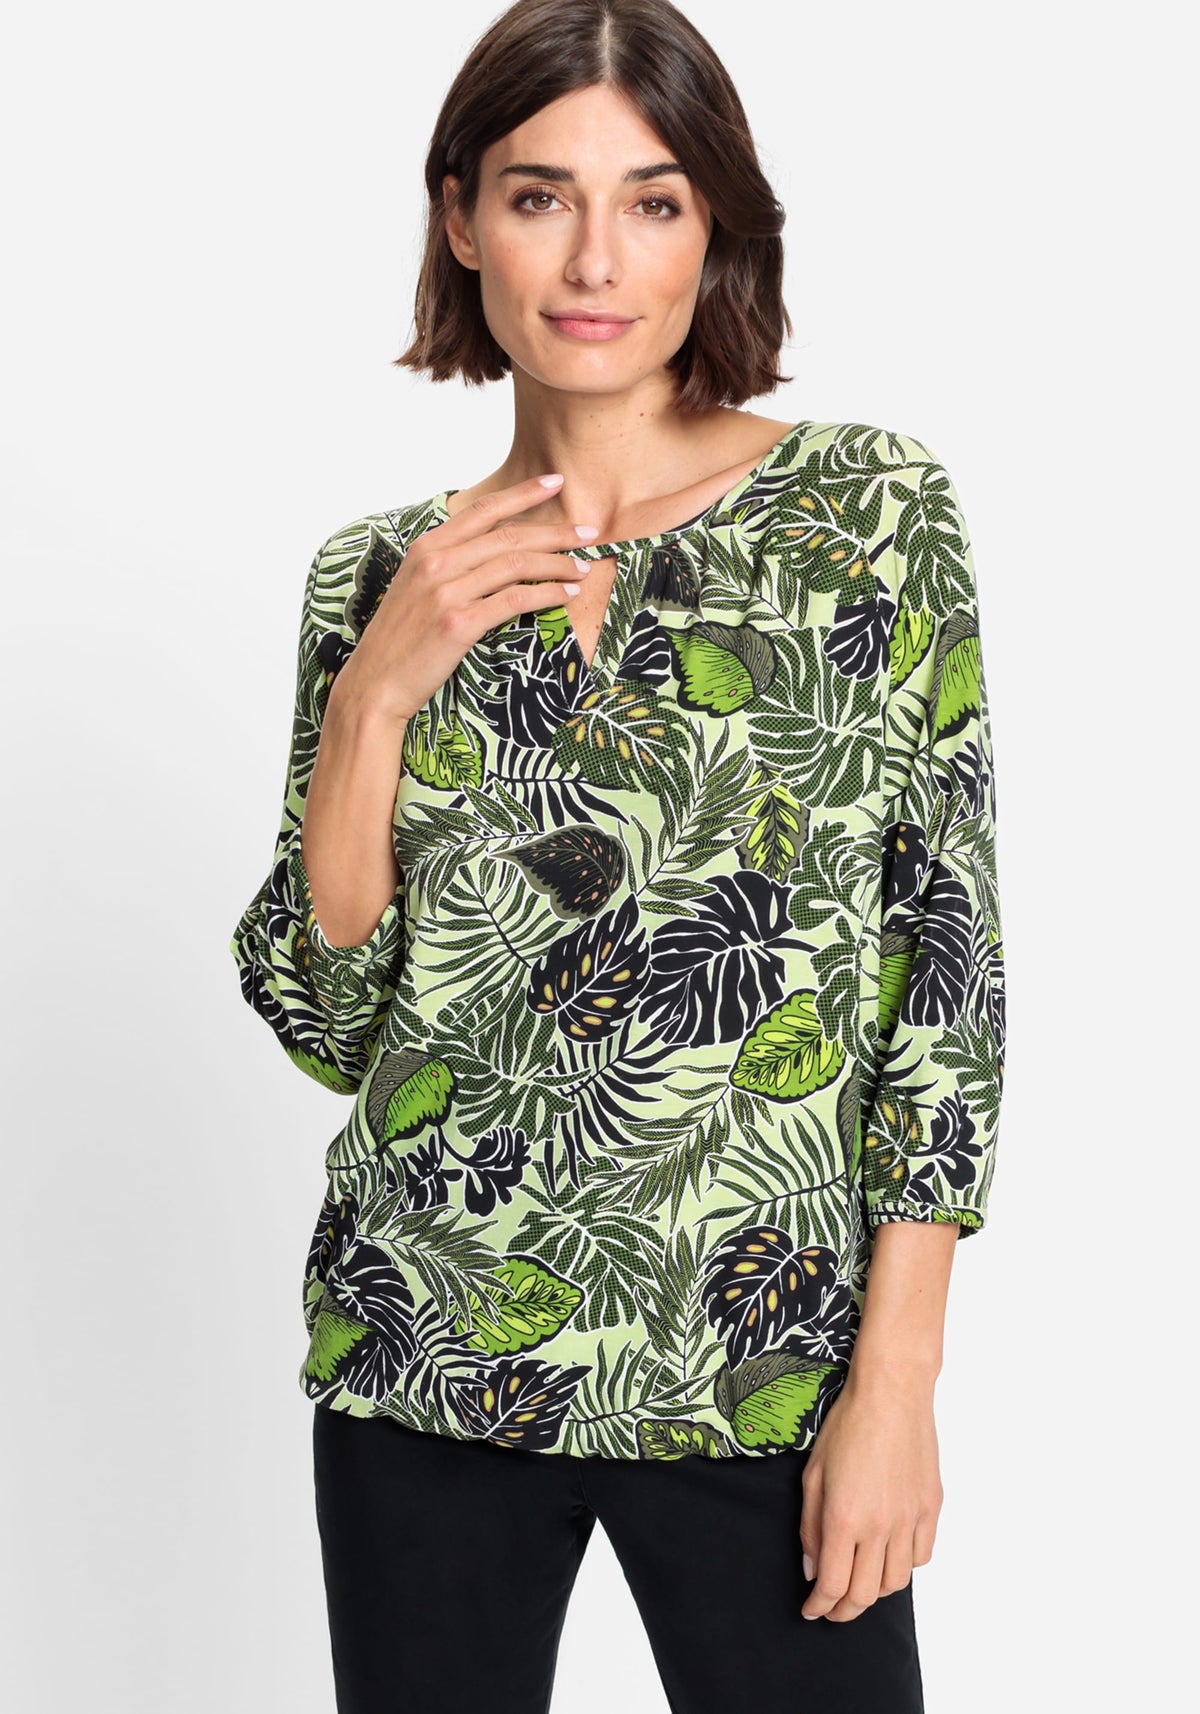 Cotton Blend 3/4 Sleeve Leaf Print T-Shirt containing TENCEL™ Modal